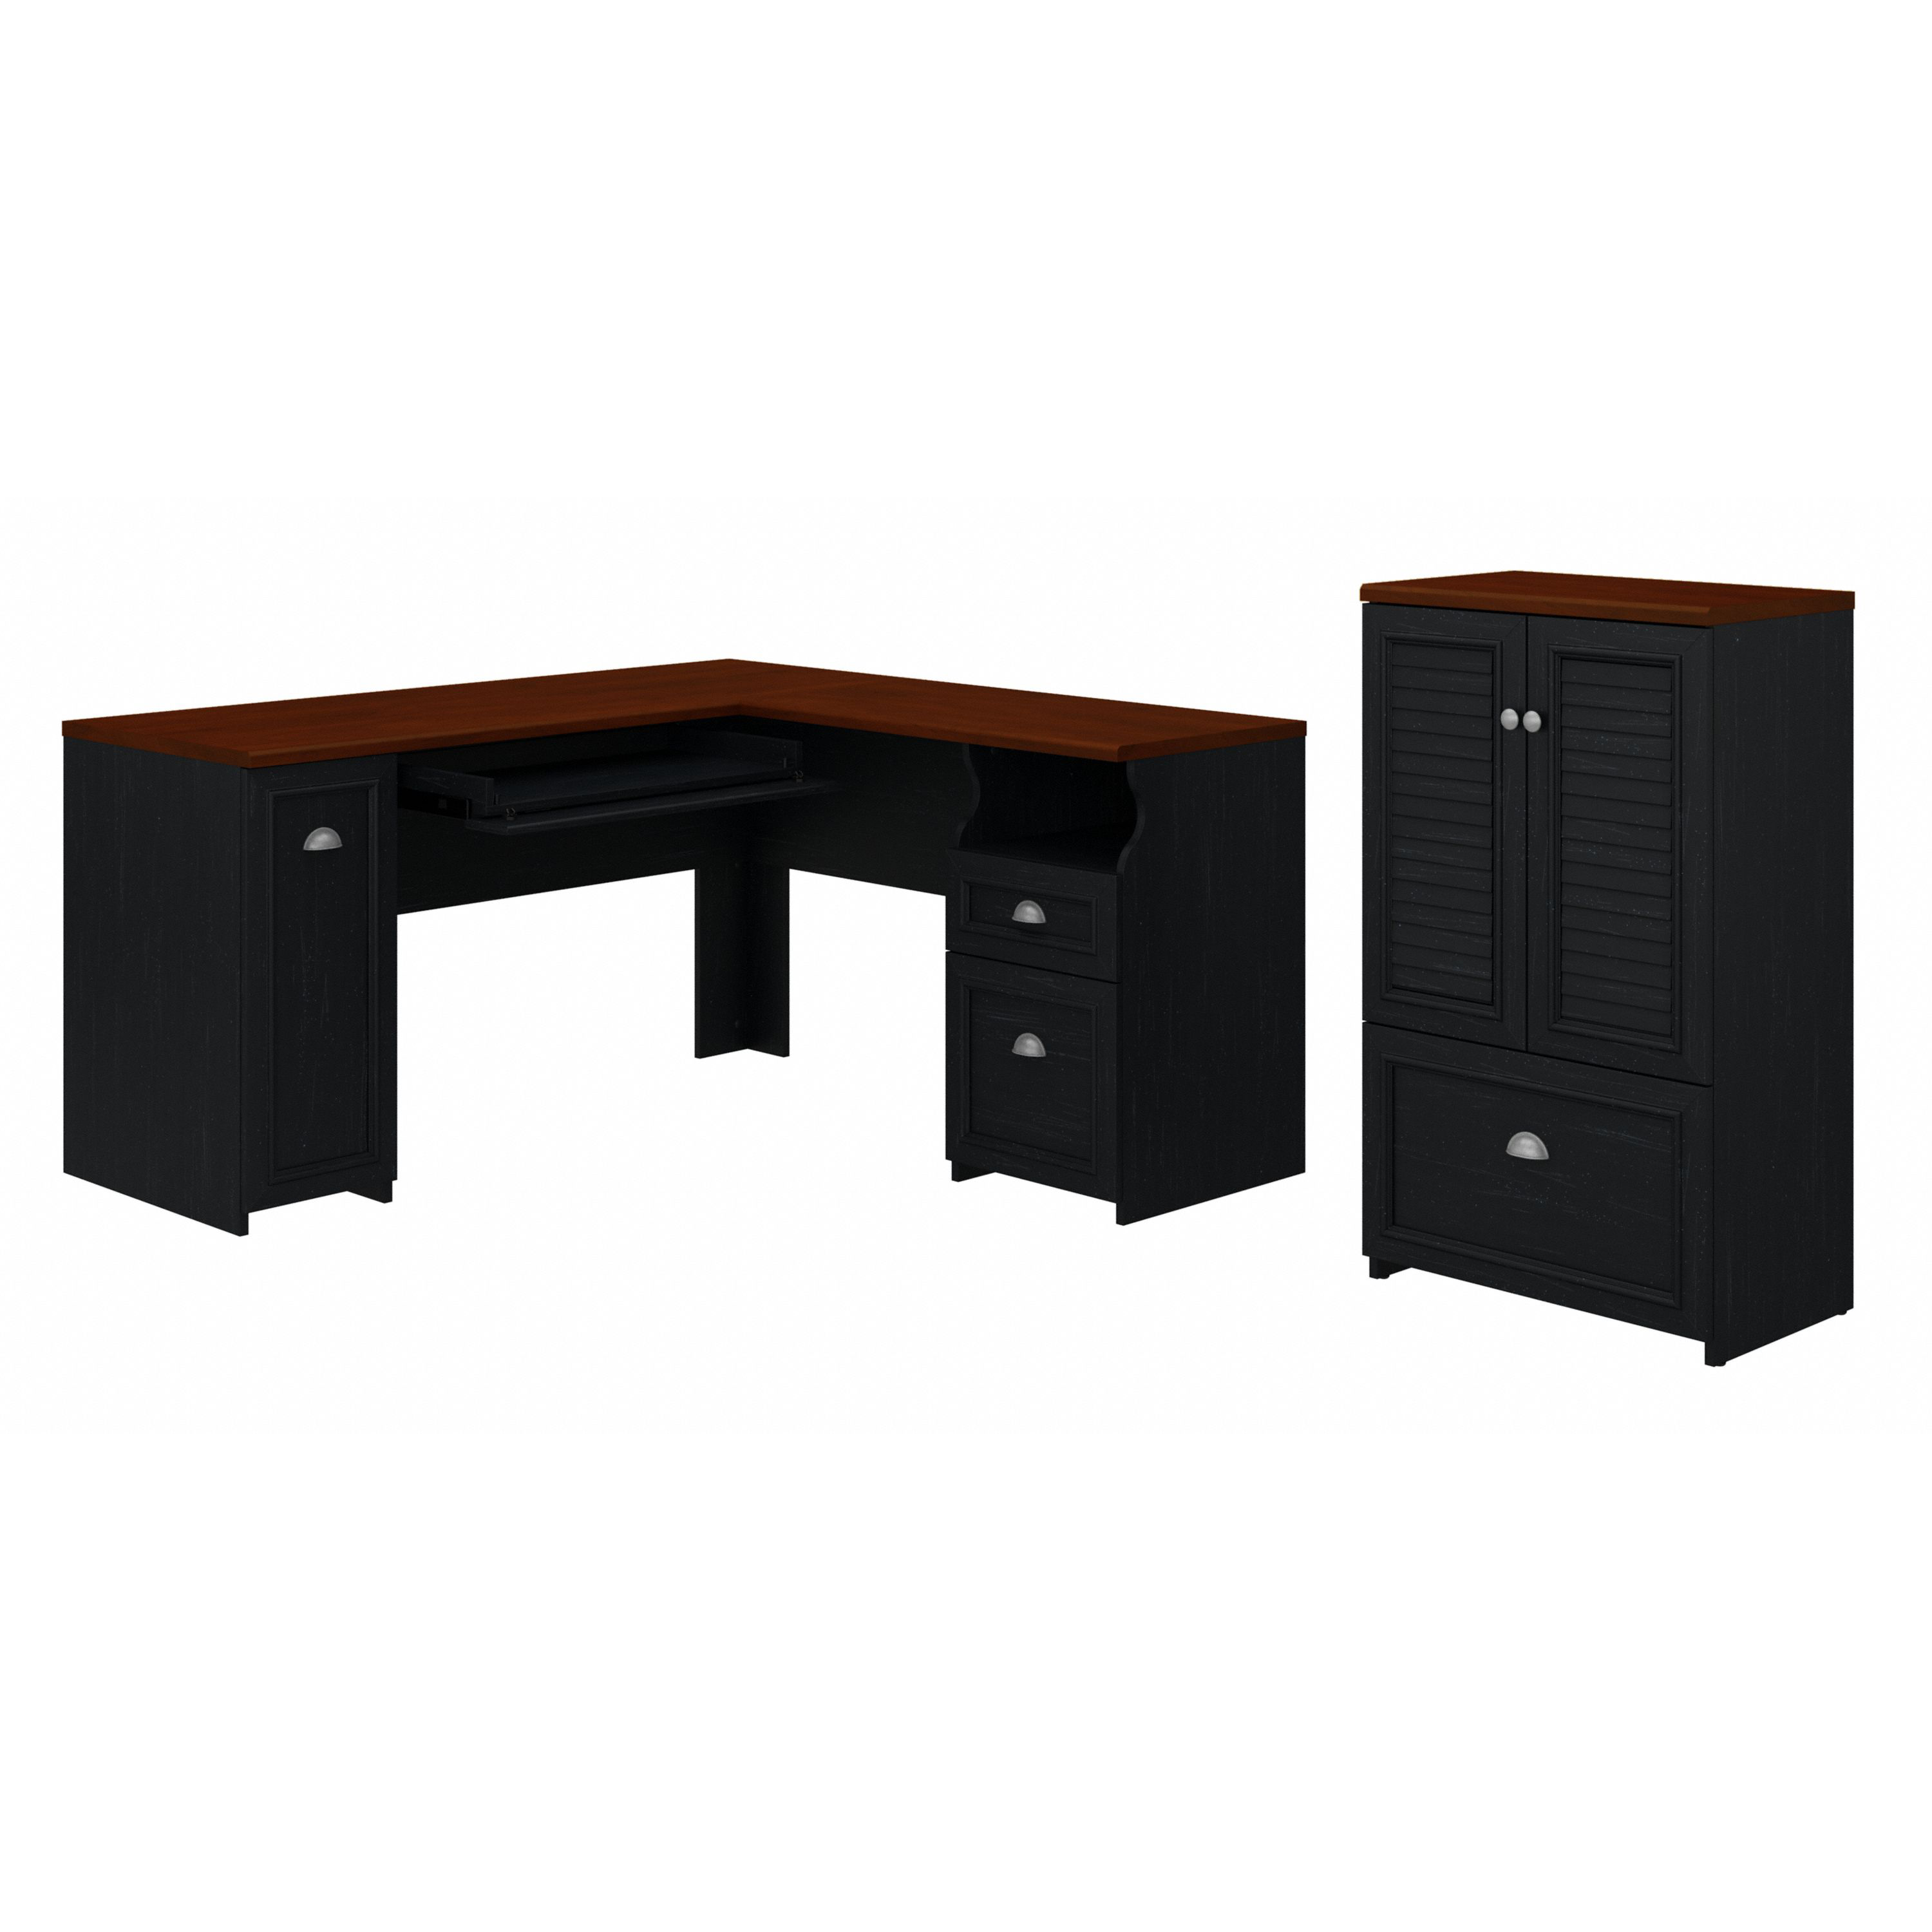 Shop Bush Furniture Fairview 60W L Shaped Desk and 2 Door Storage Cabinet with File Drawer 02 FV009AB #color_antique black/hansen cherry